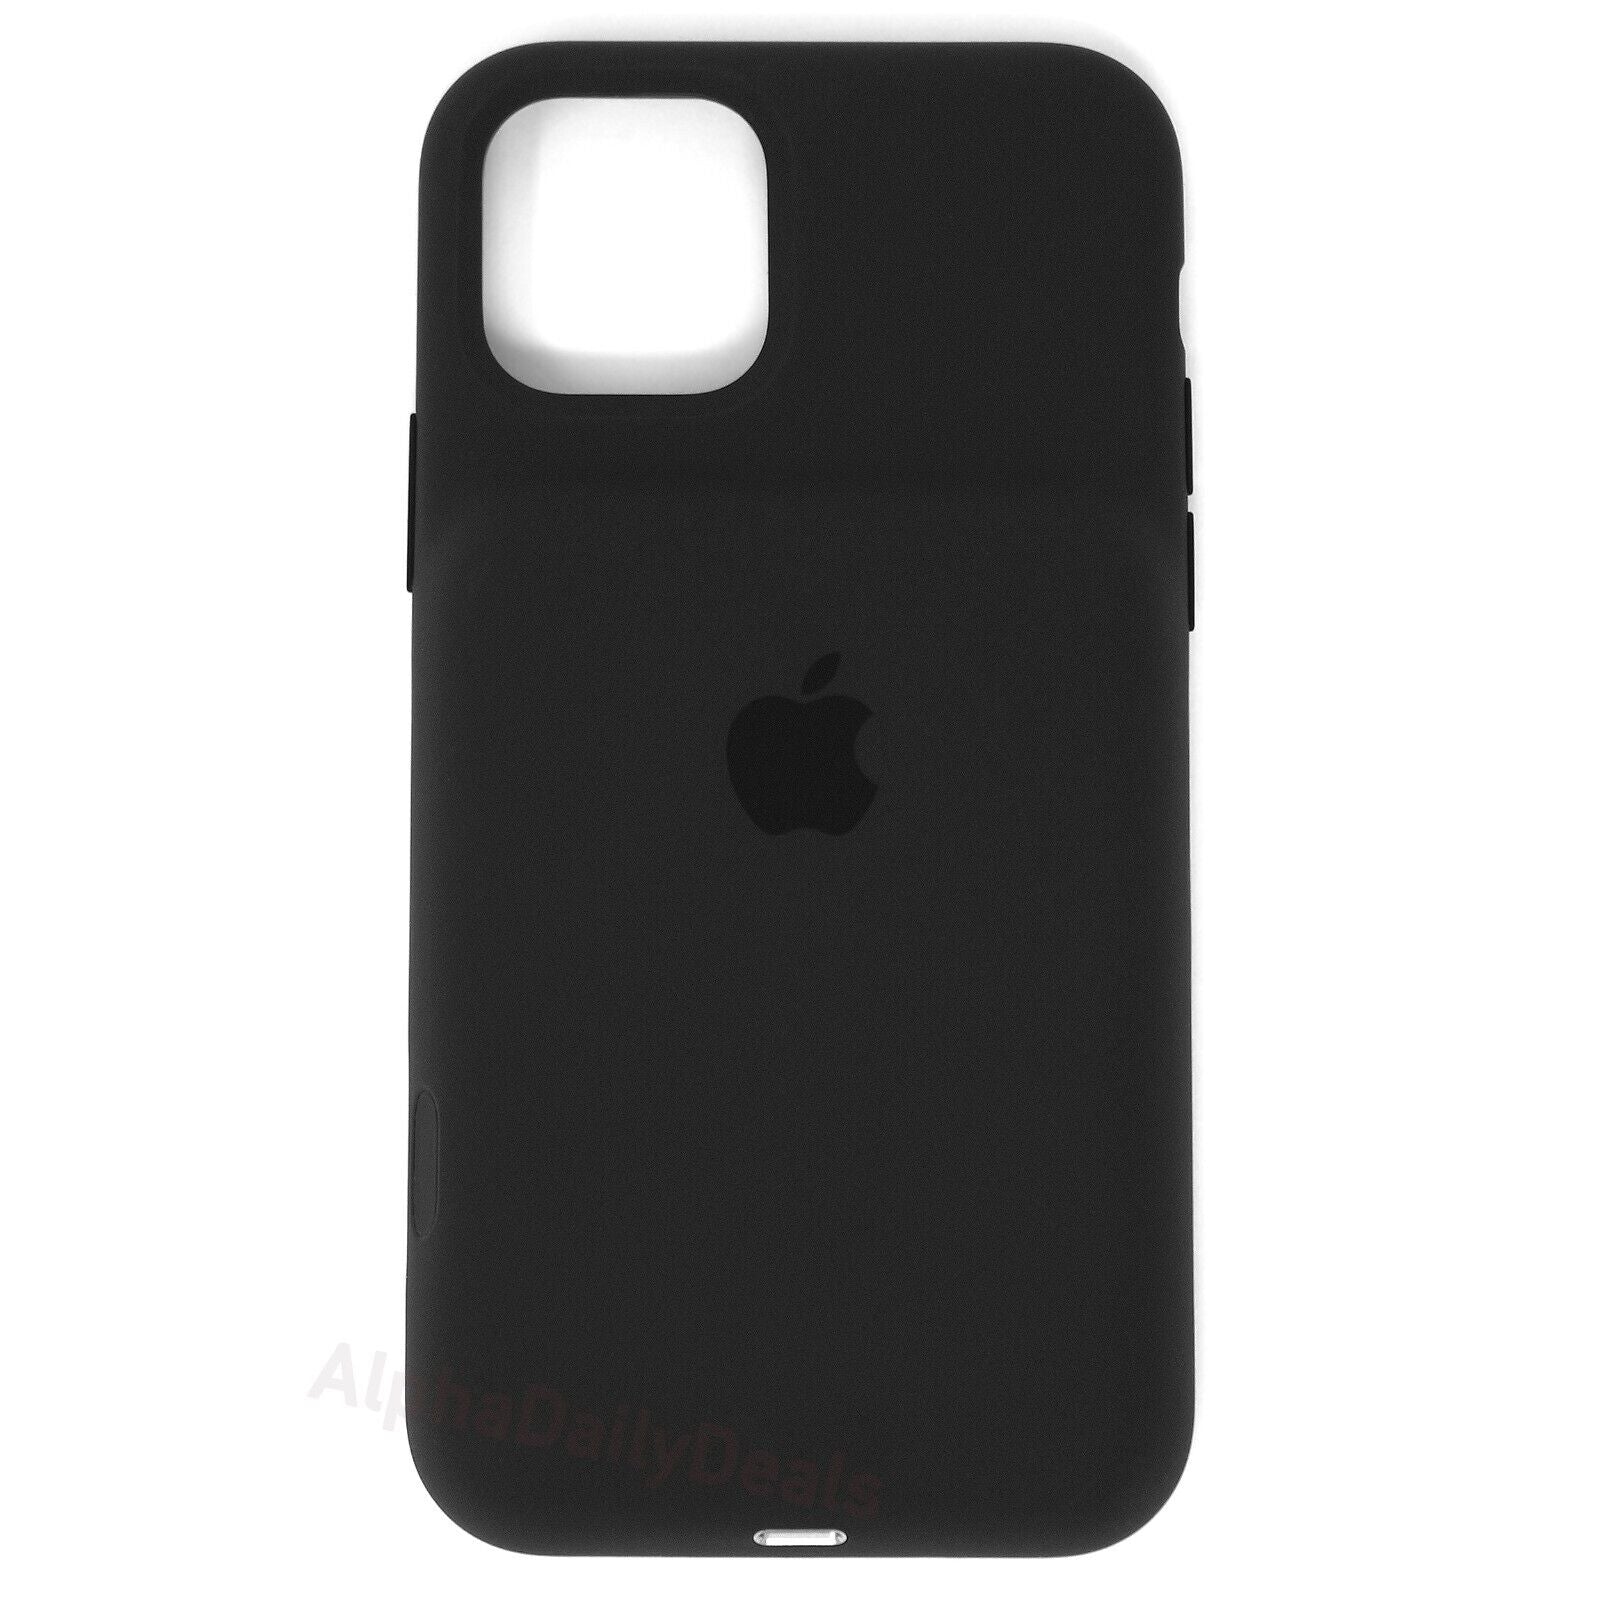 Genuine Apple iPhone 11 PRO Smart Battery Case Black NEW SEALED